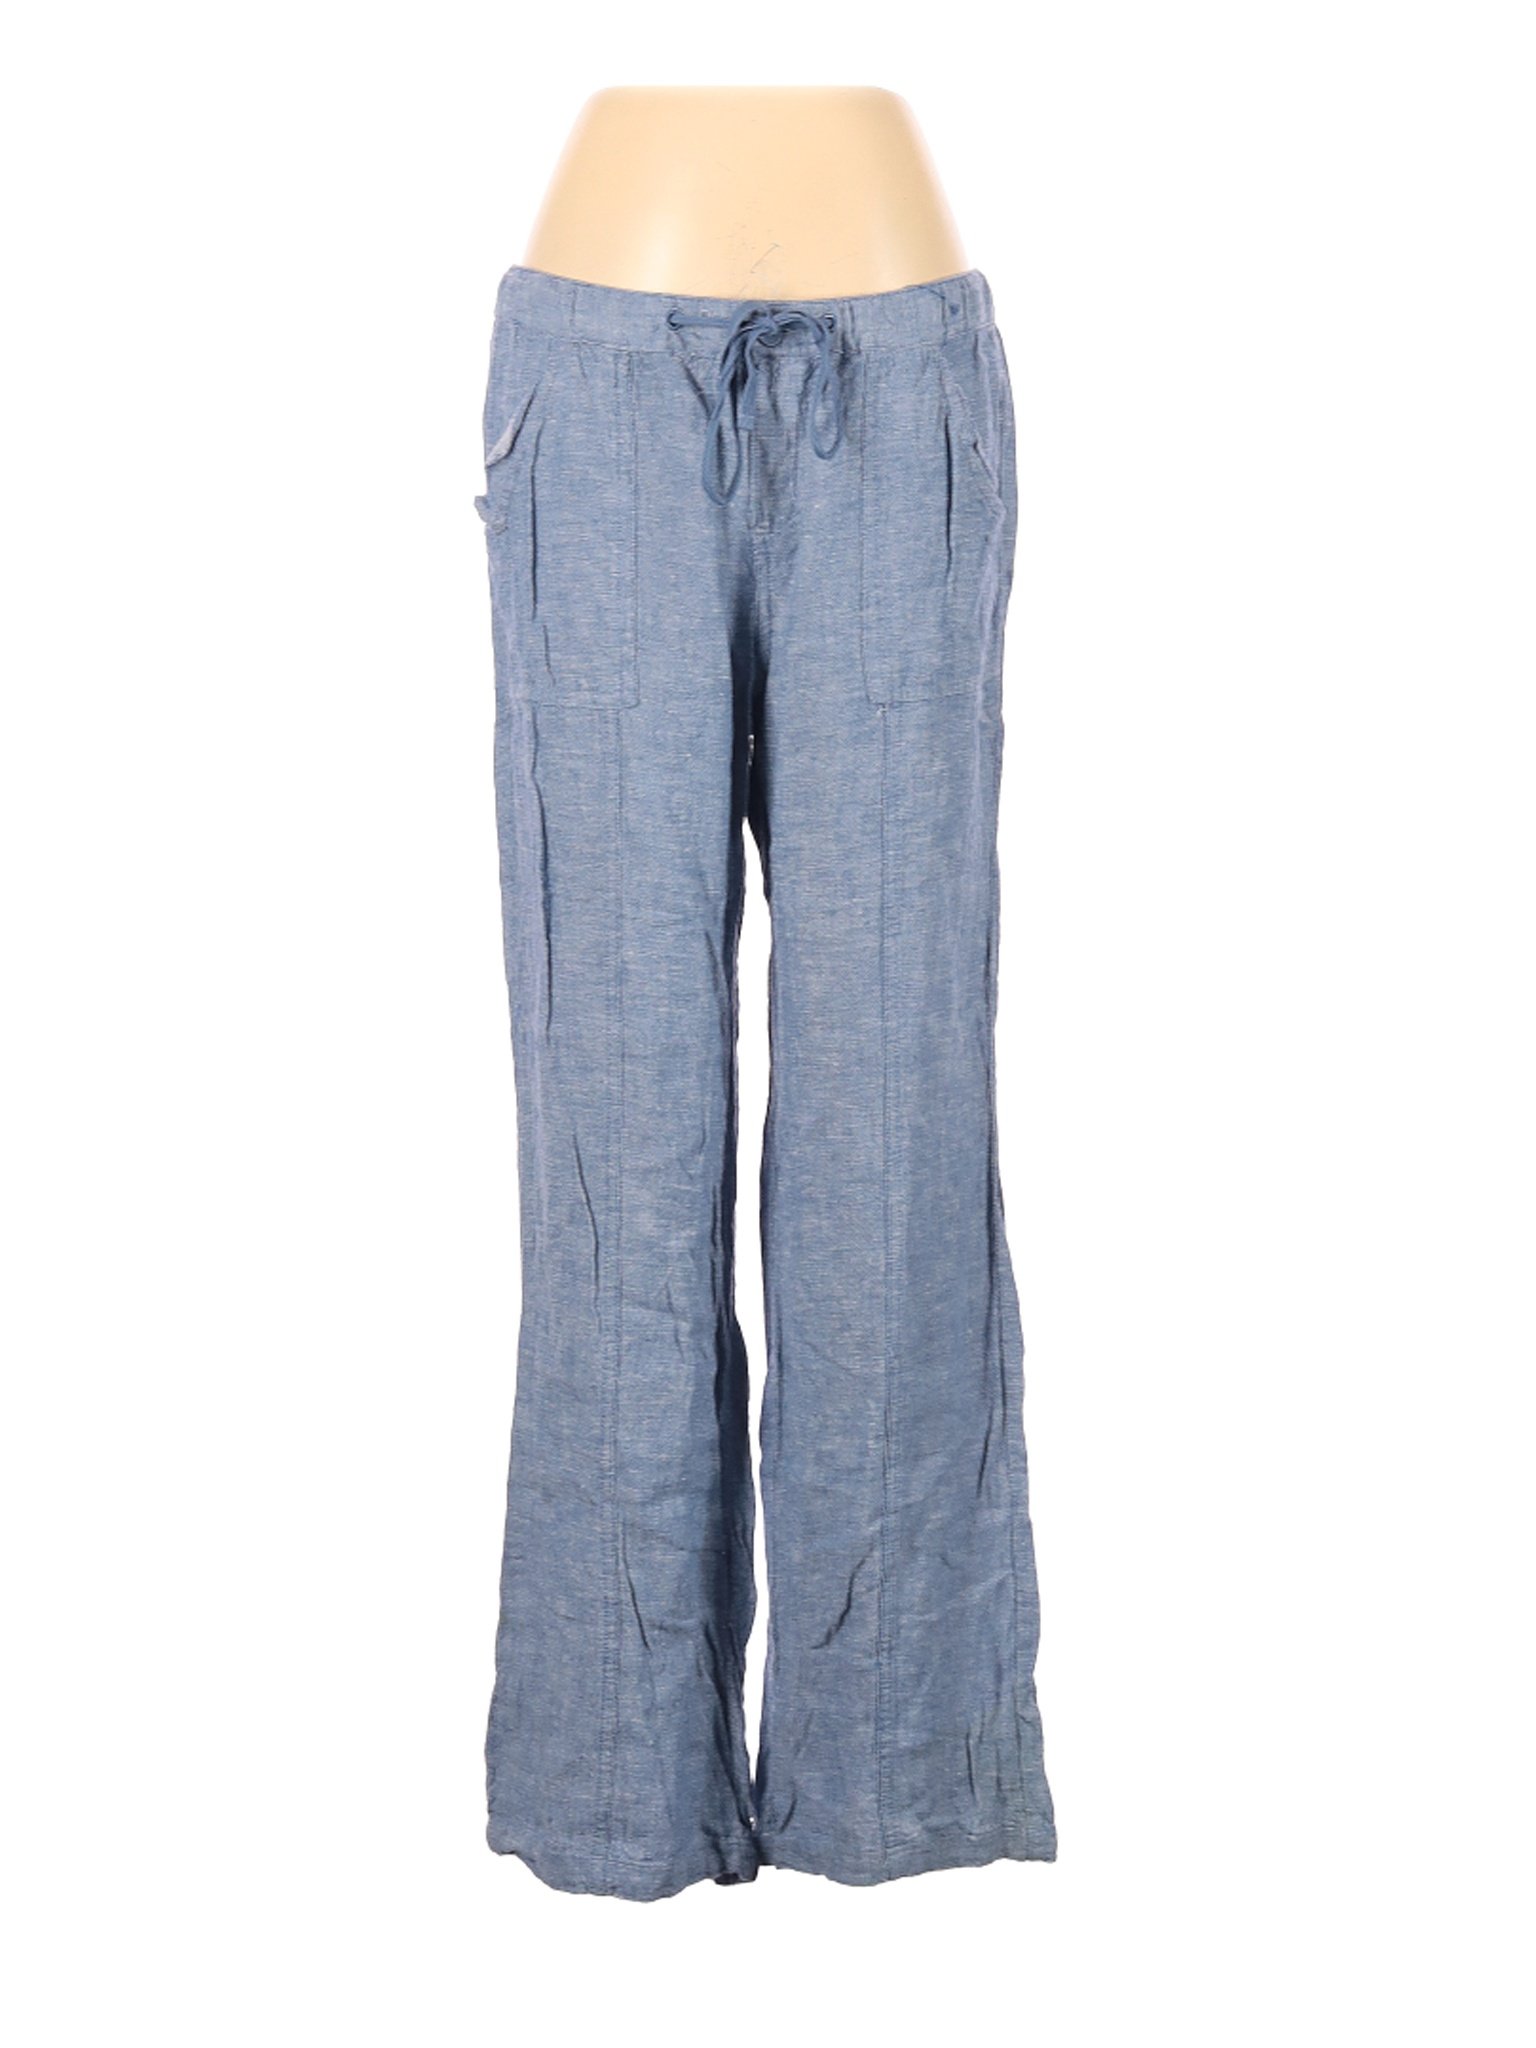 NY&C Women Blue Linen Pants M eBay